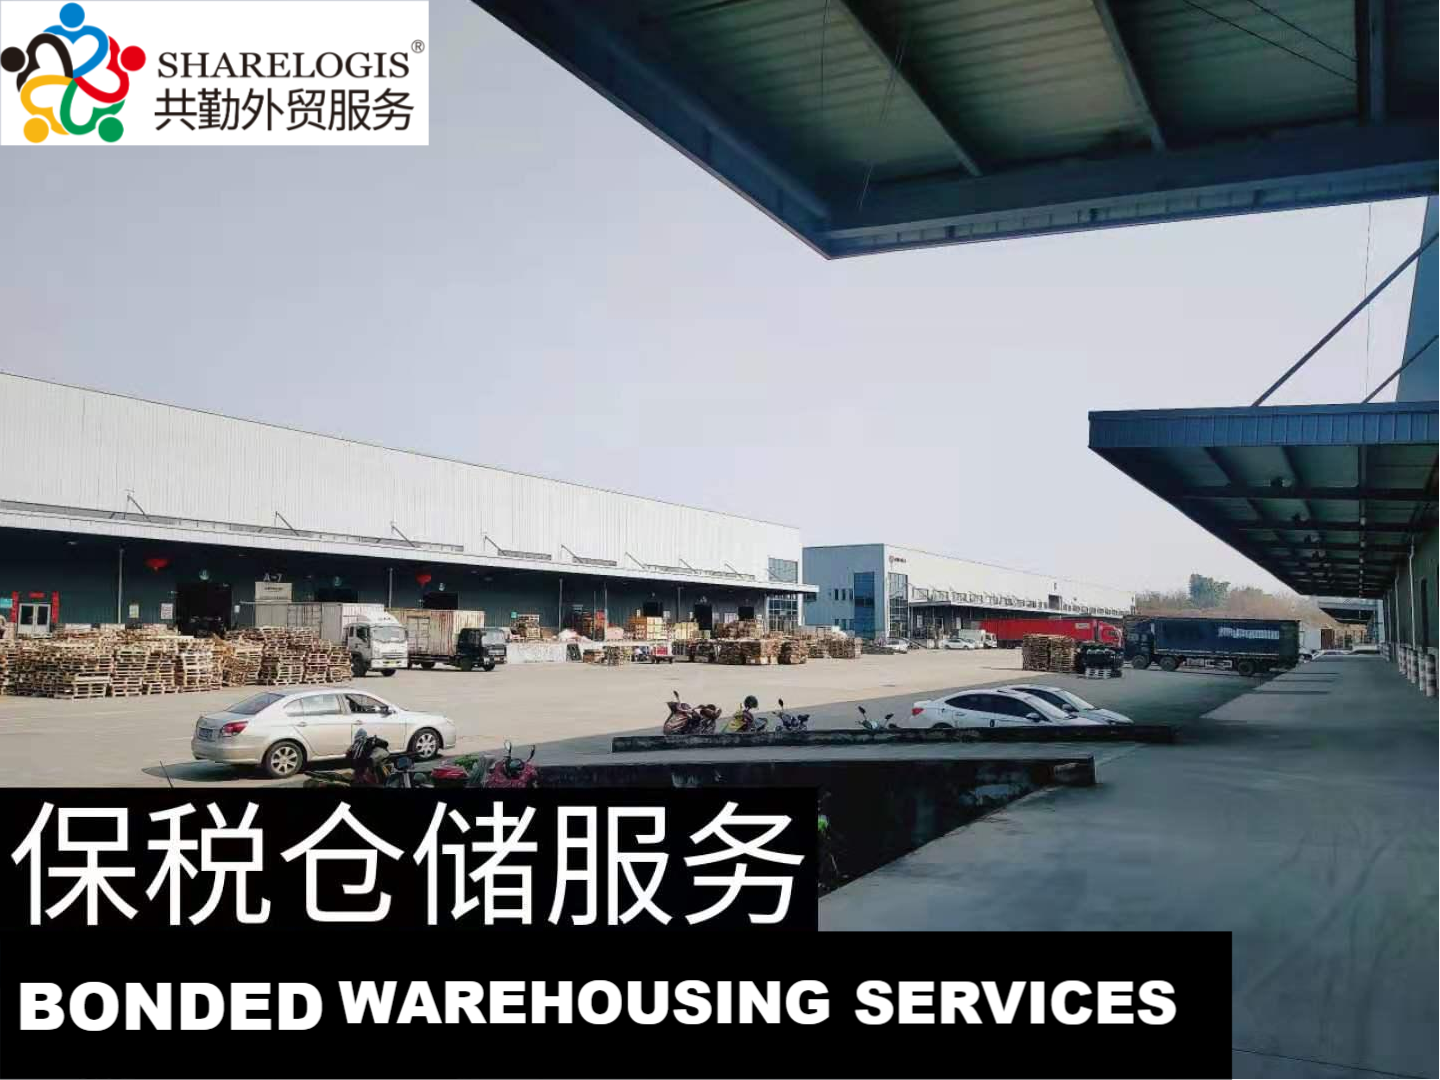 BONDED WAREHOUSING SERVICES保税仓储服务